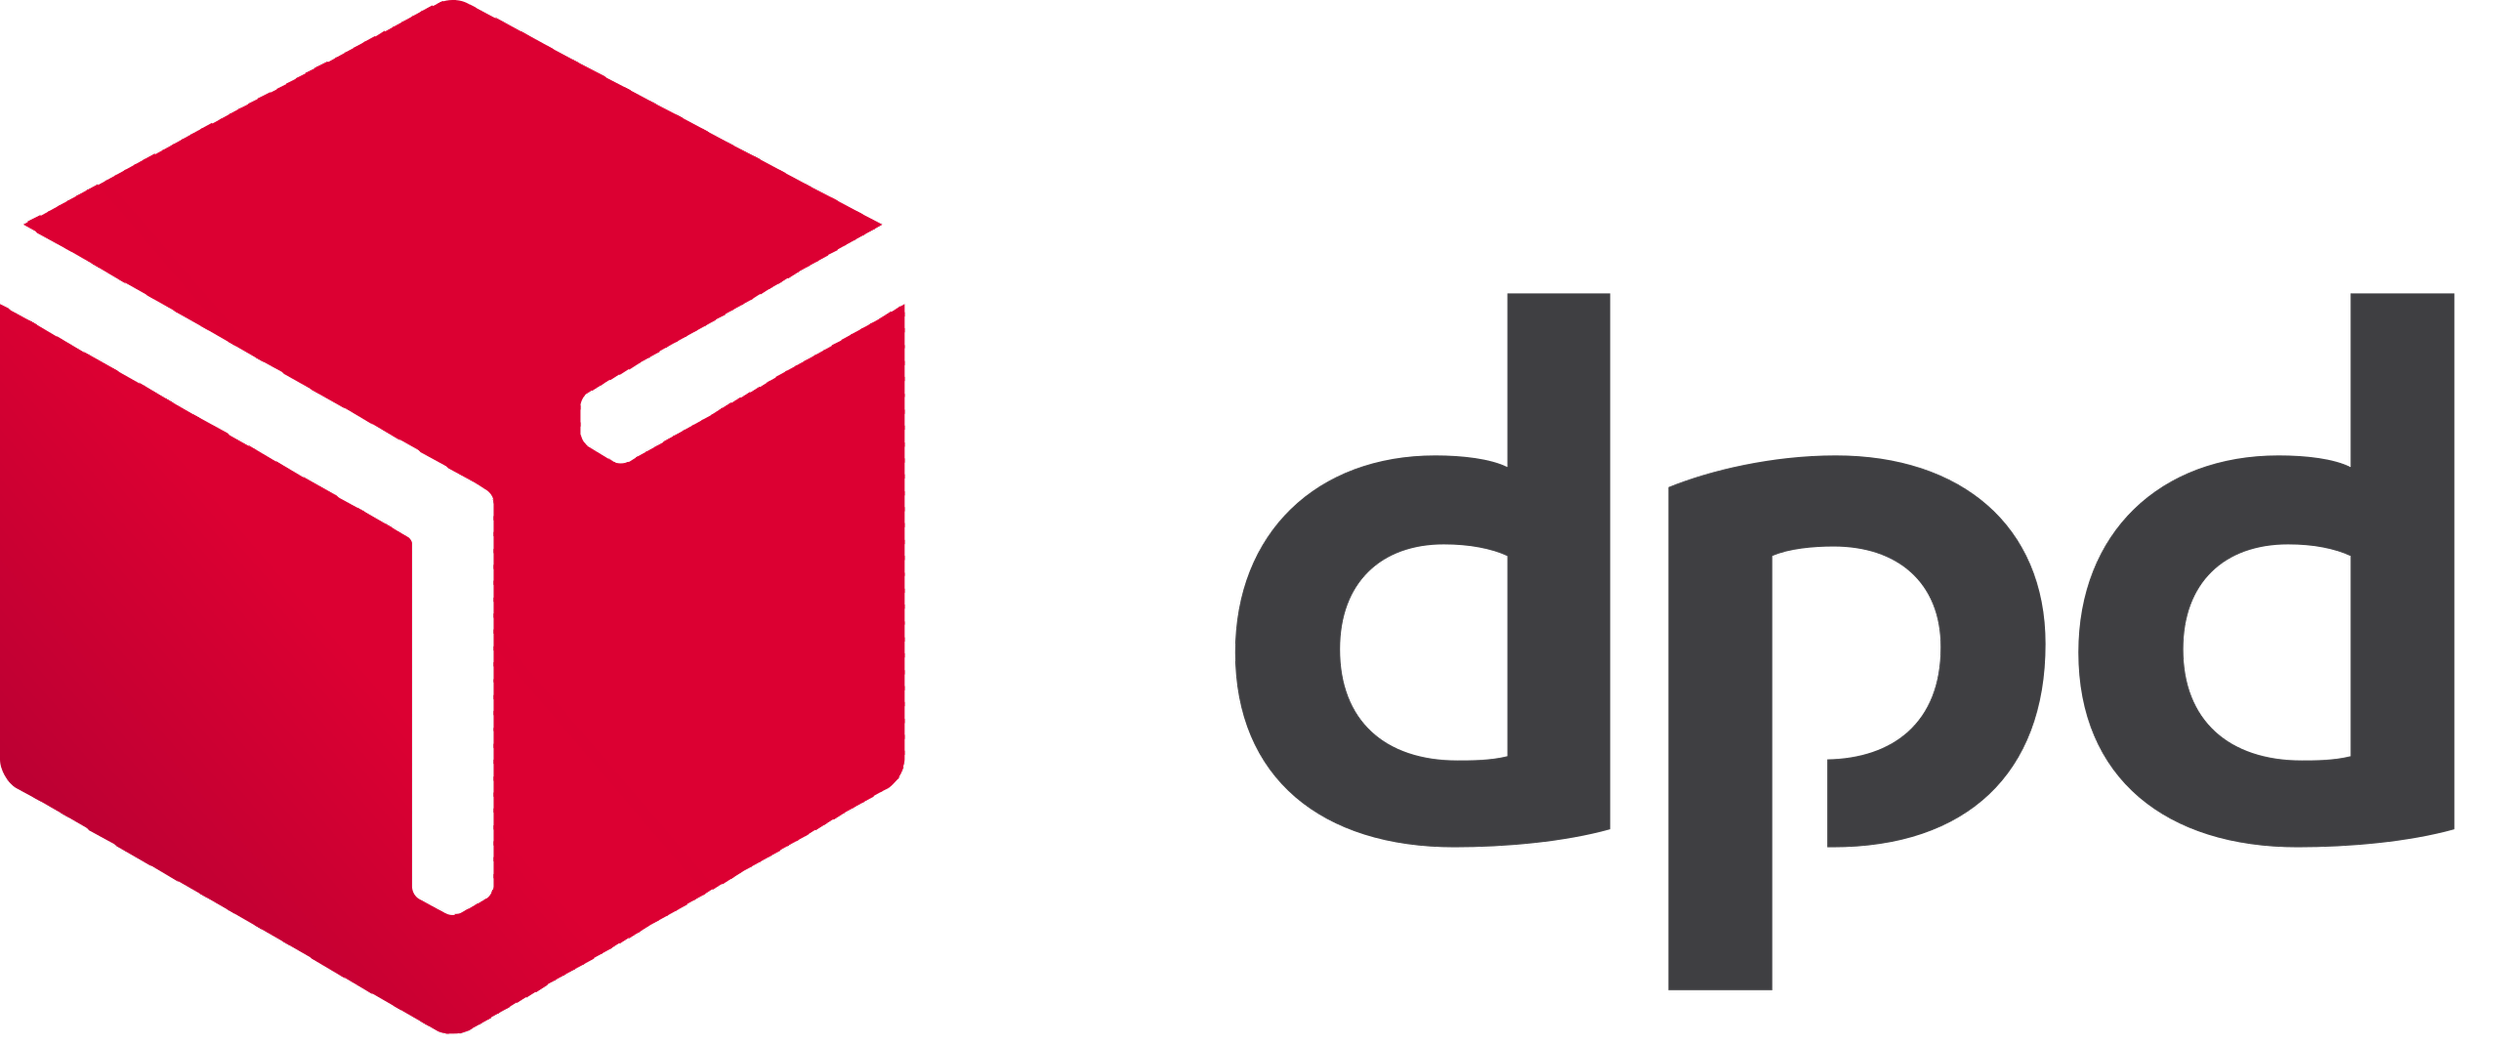 2560px-DPD_logo_(2015).svg.png